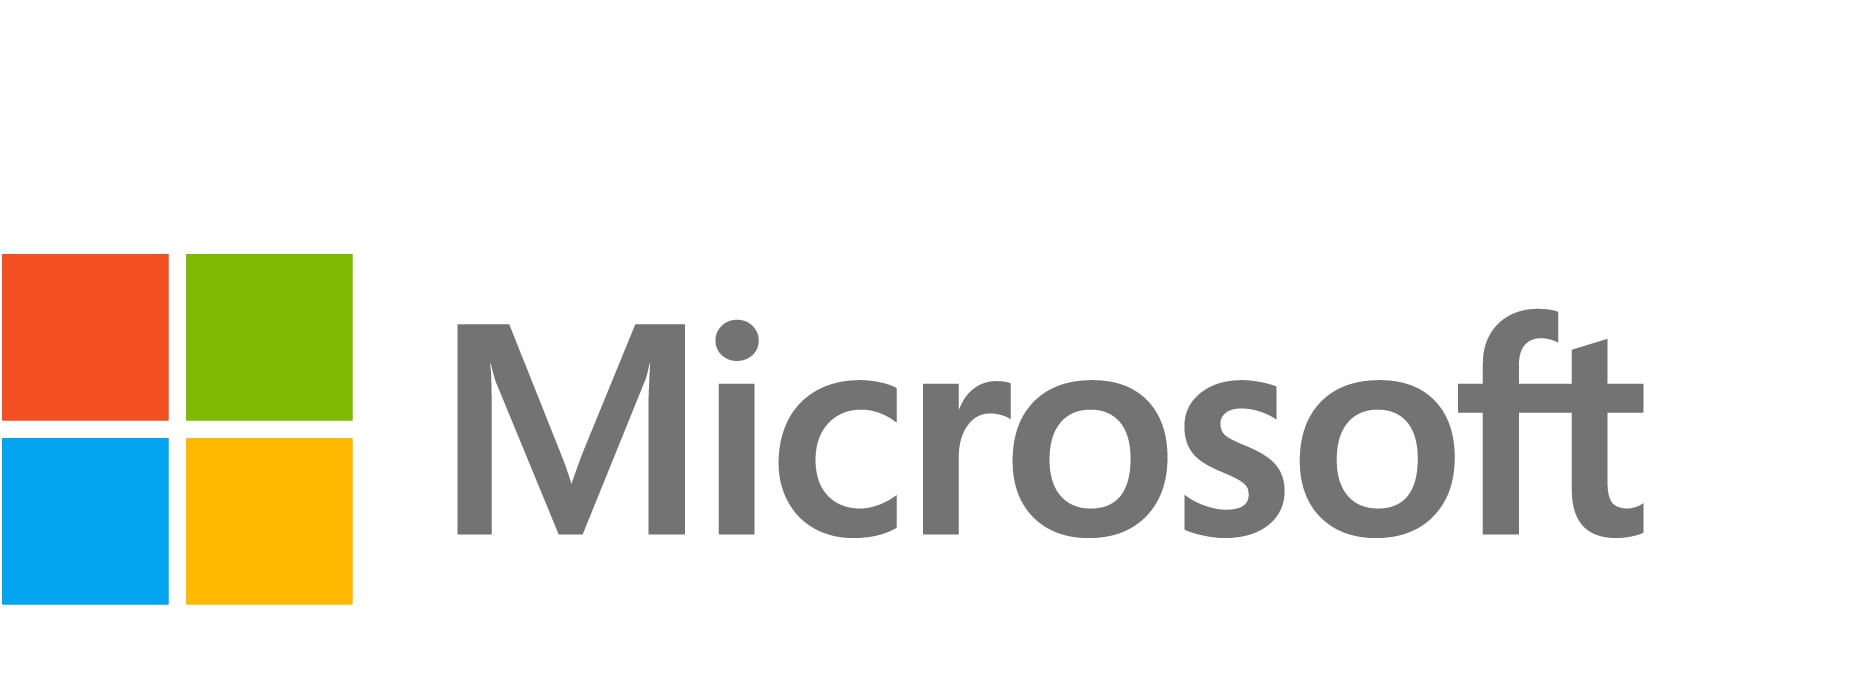 Microsoft Visio Professional - license & software assurance - 1 device